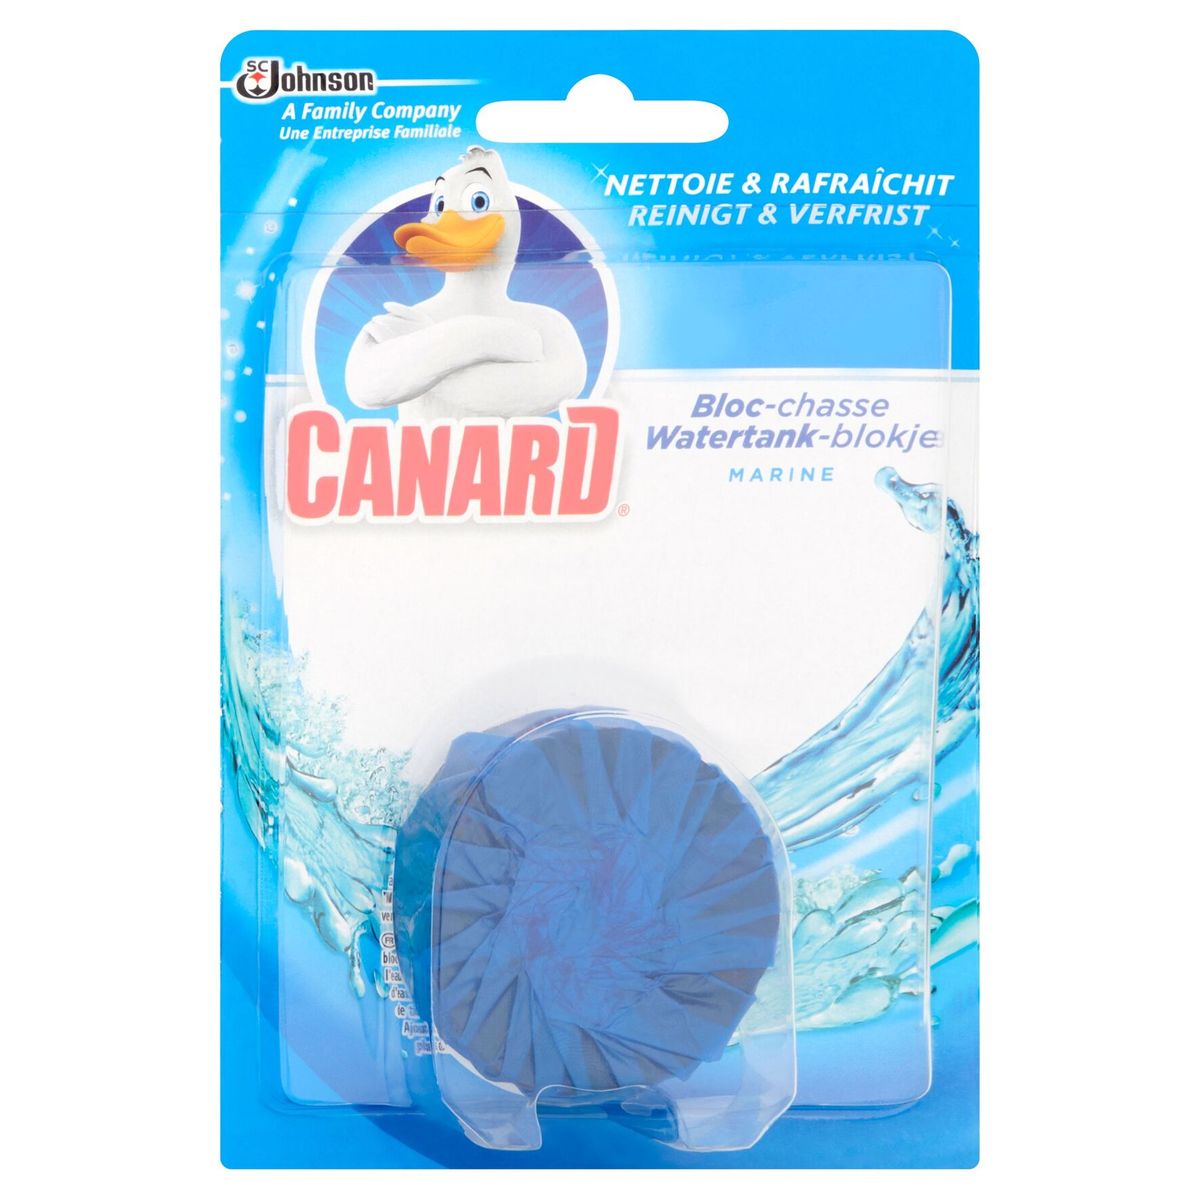 Canard®-Watertank-Blokje Marine -50 g